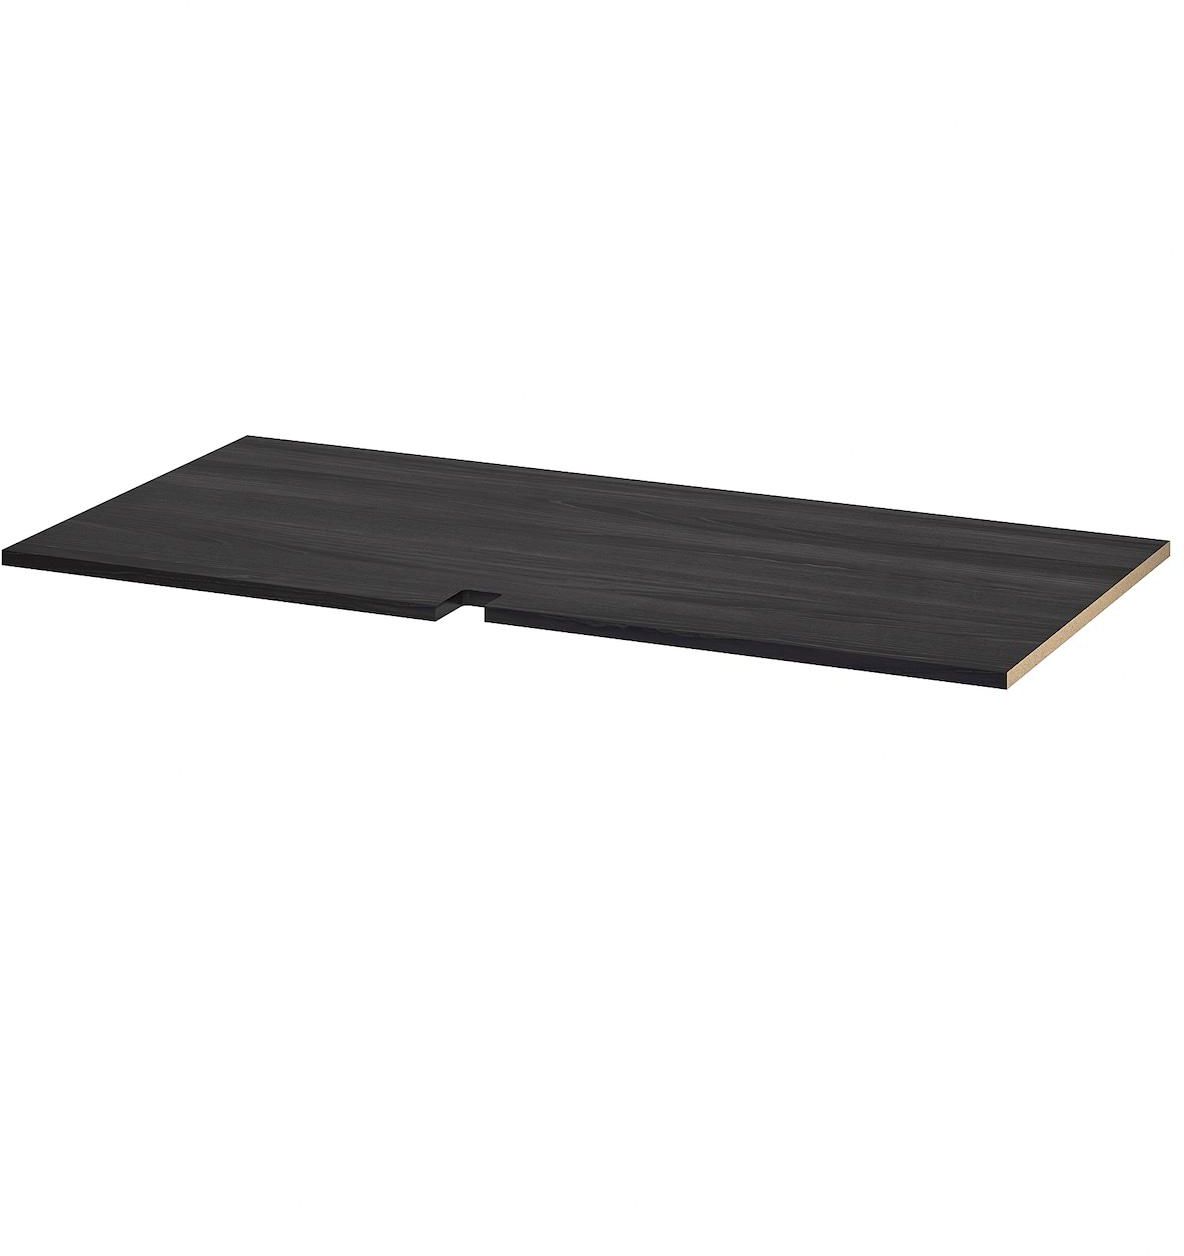 UTRUSTA Shelf for corner base cabinet - wood effect black 128 cm